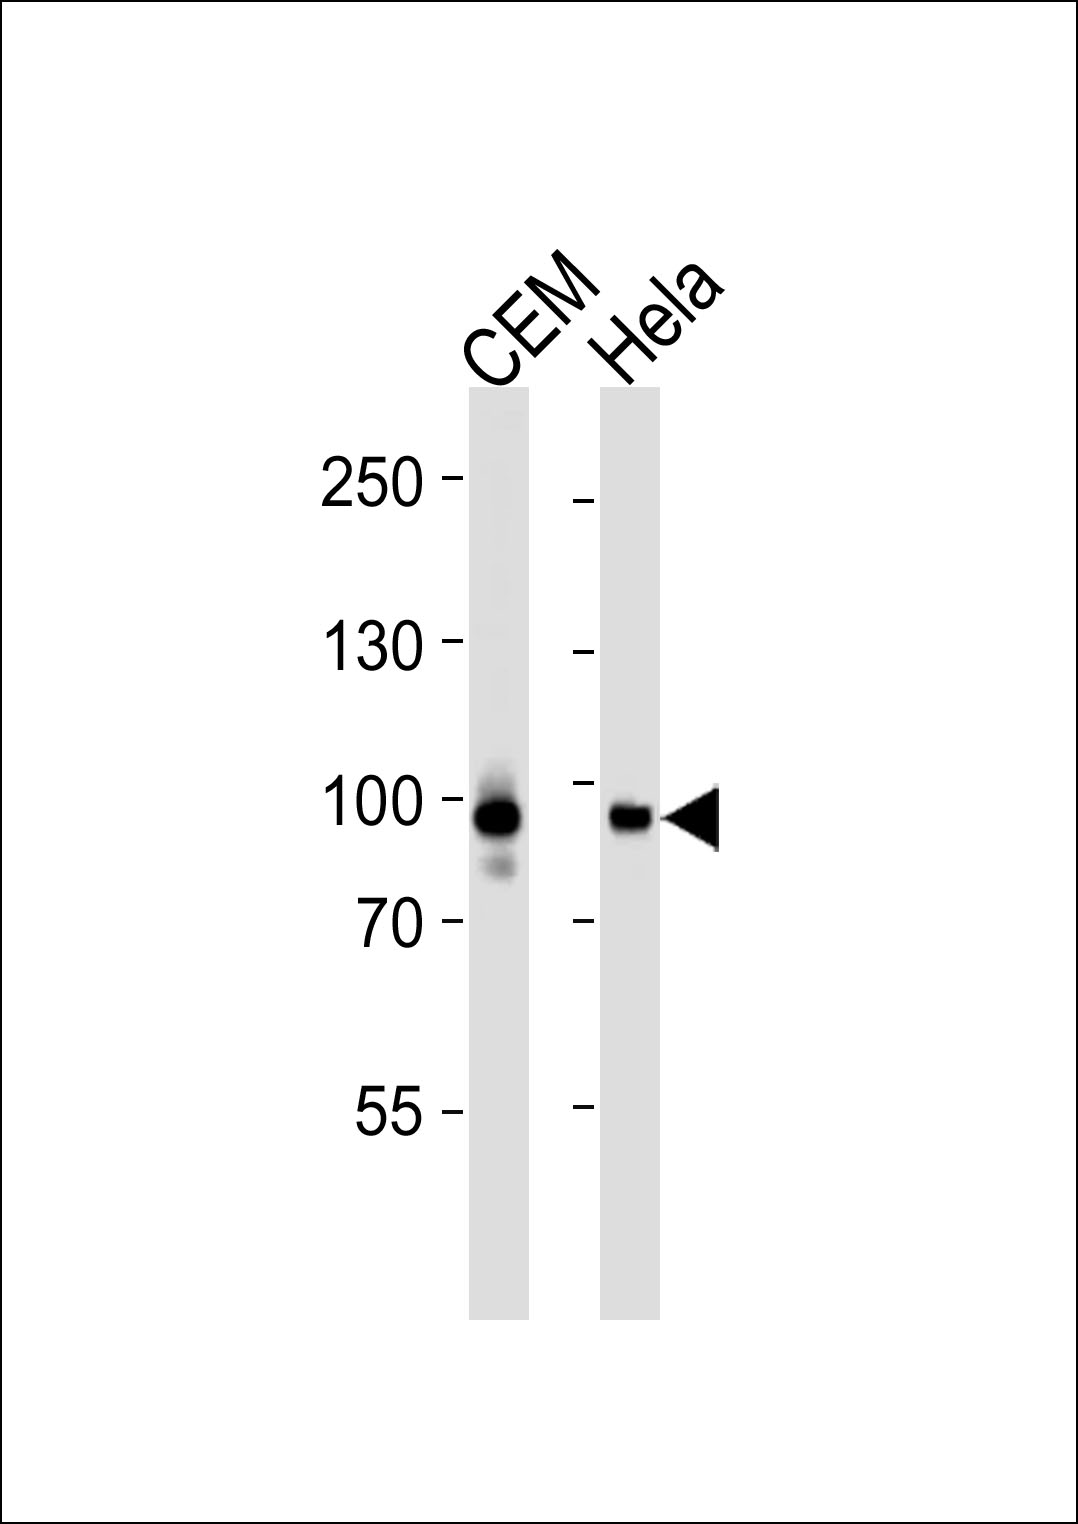 Mouse anti-STAT3 Monoclonal Antibody(1200CT146.104.153)